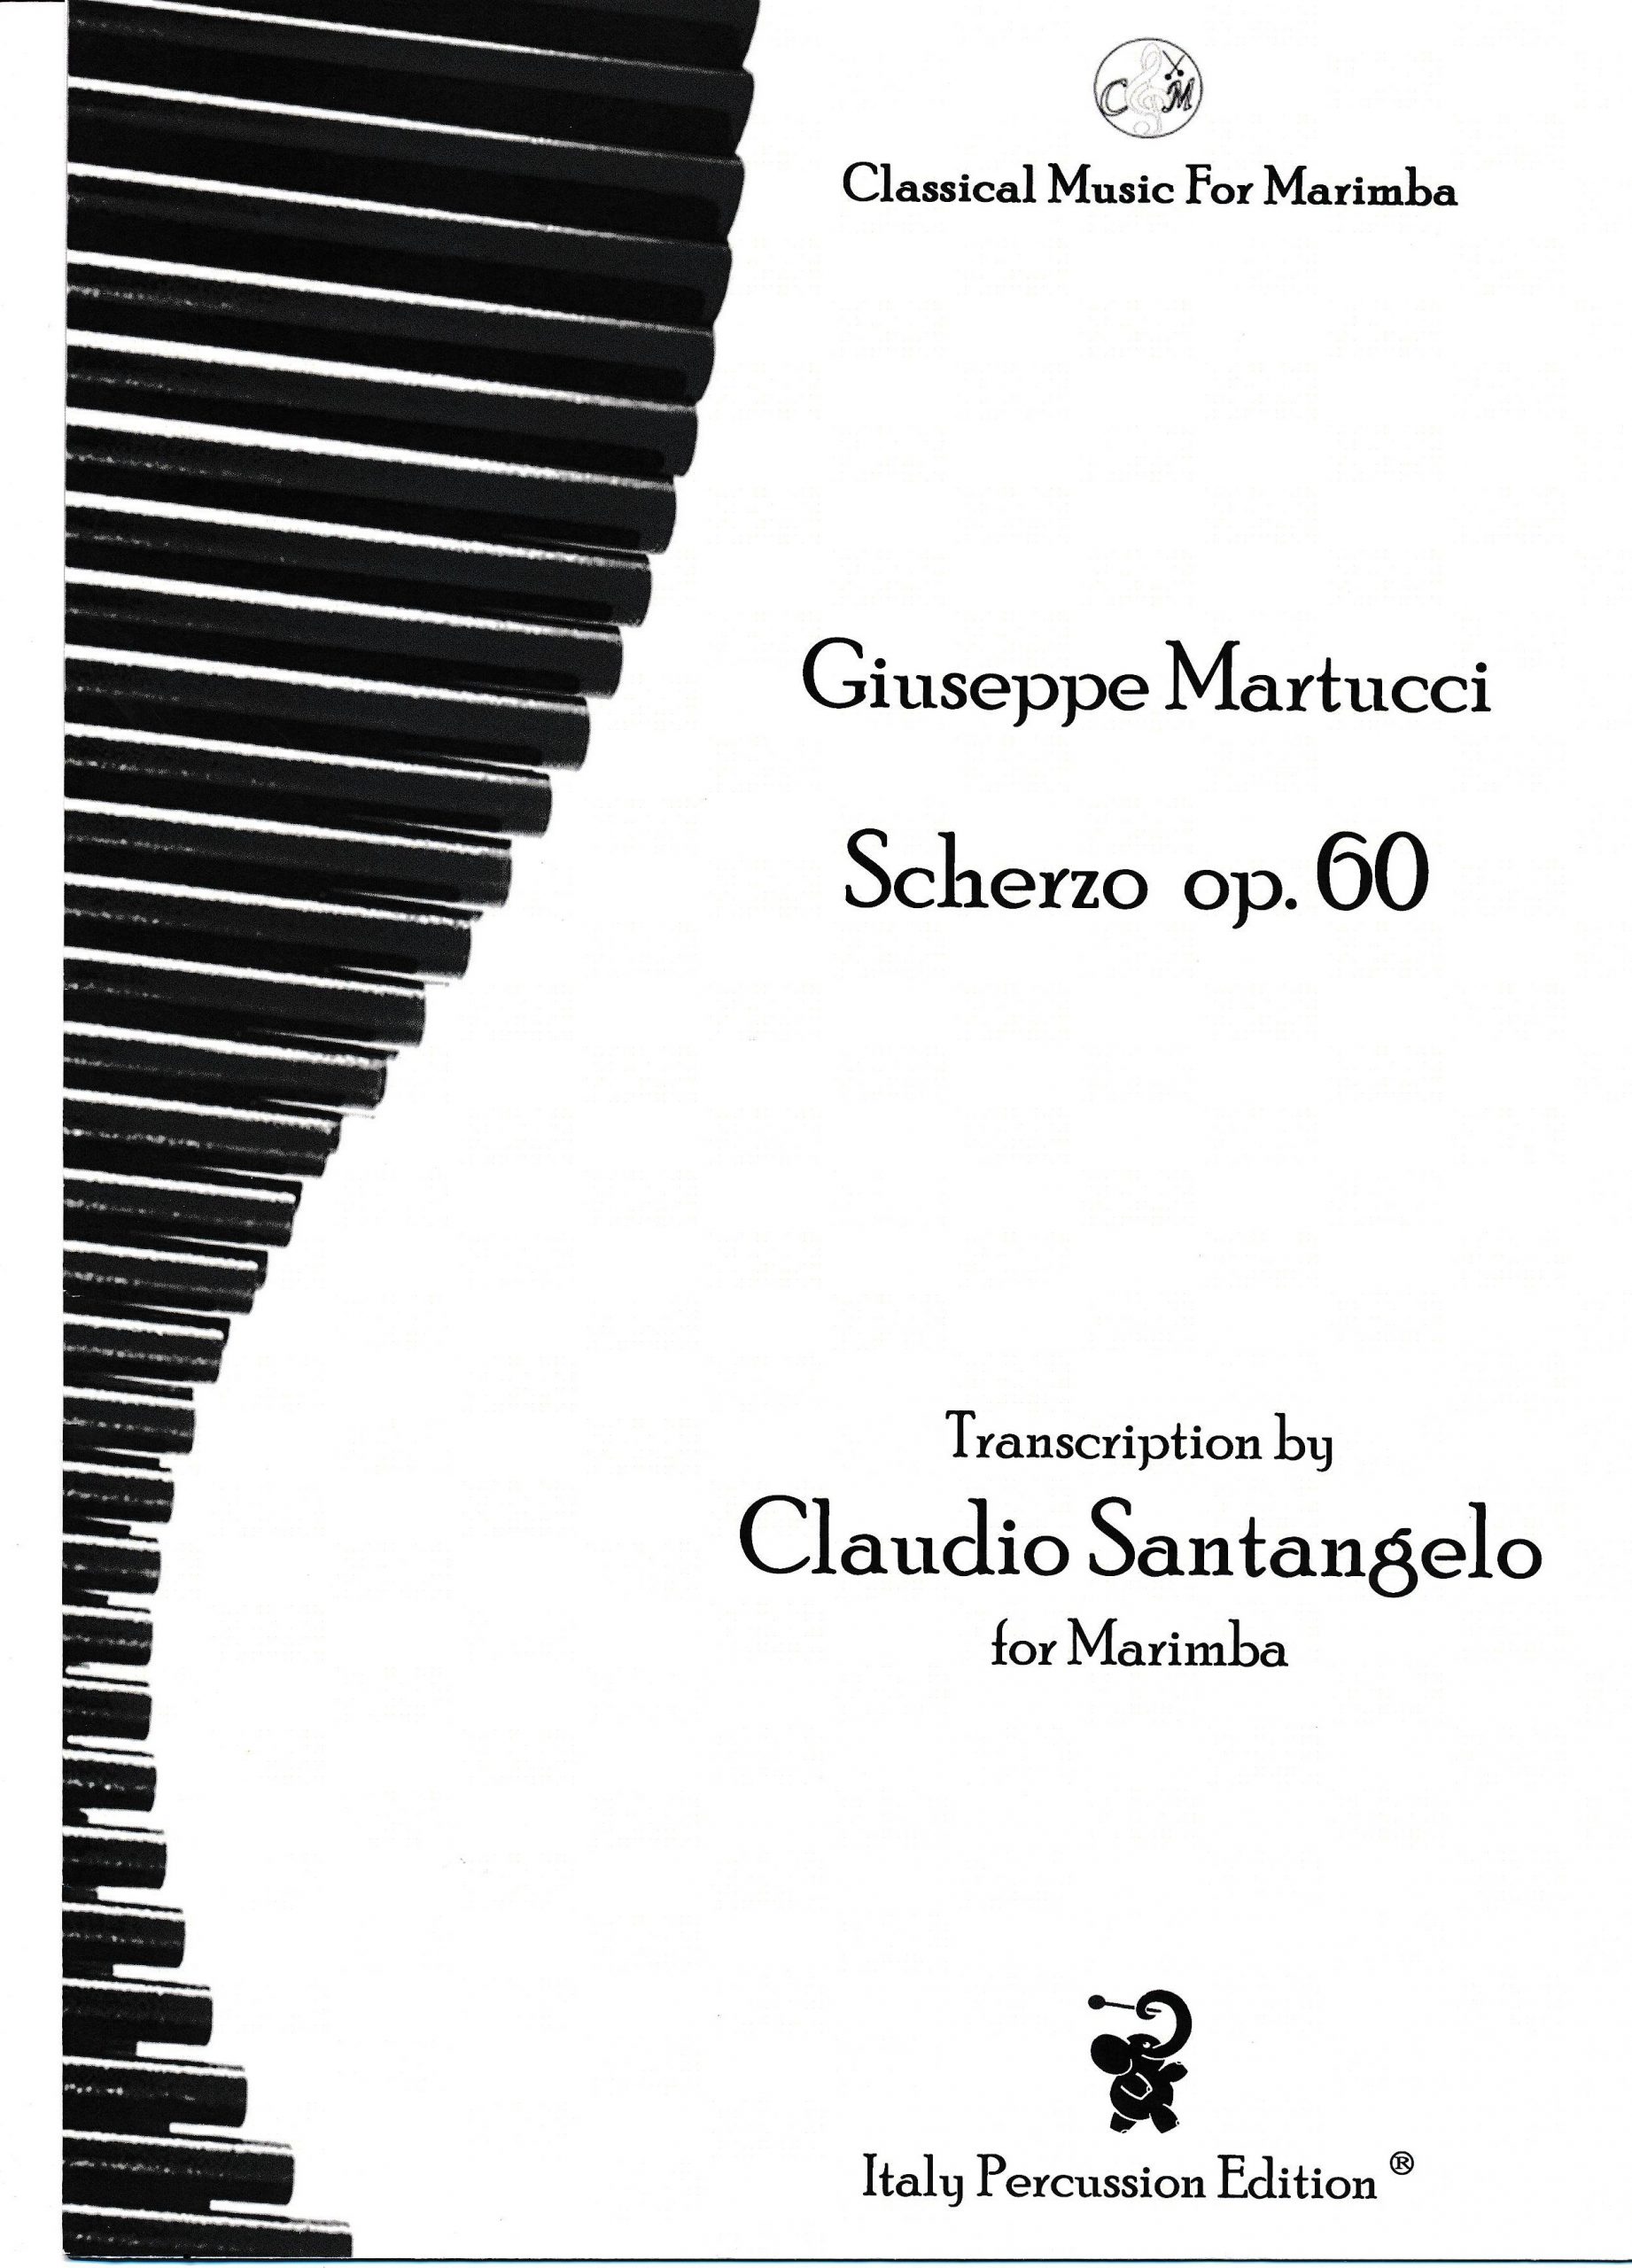 Scherzo op. 60 by Martucci arr. Claudio Santangelo